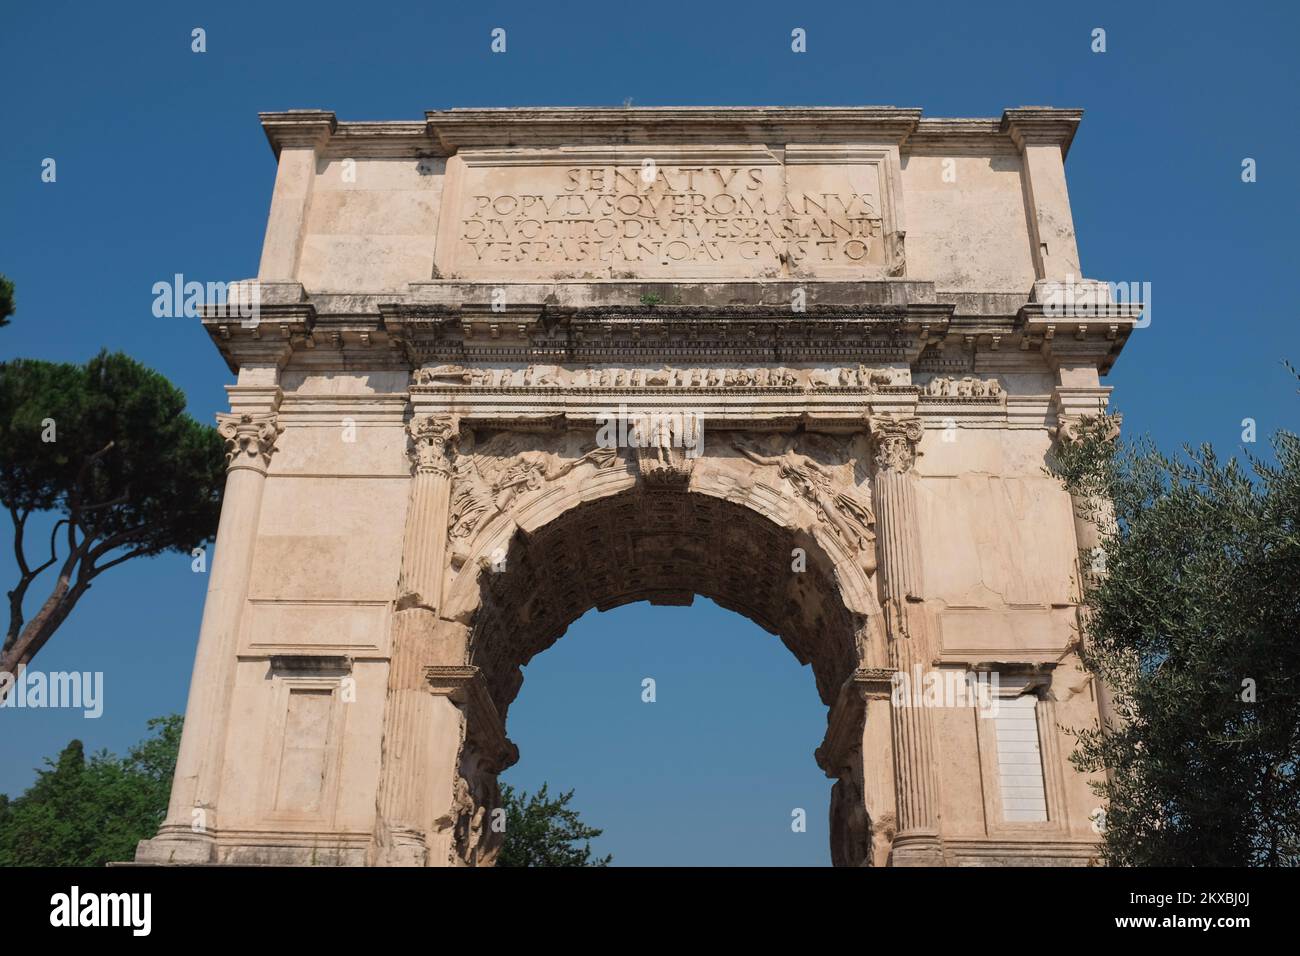 Rom, Italien - Ruinen des Titusbogens entlang der Via Sacra im Forum Romanum. Antikes Bauwerk, das den Fall Jerusalems feiert. Symbol der jüdischen Diaspora. Stockfoto